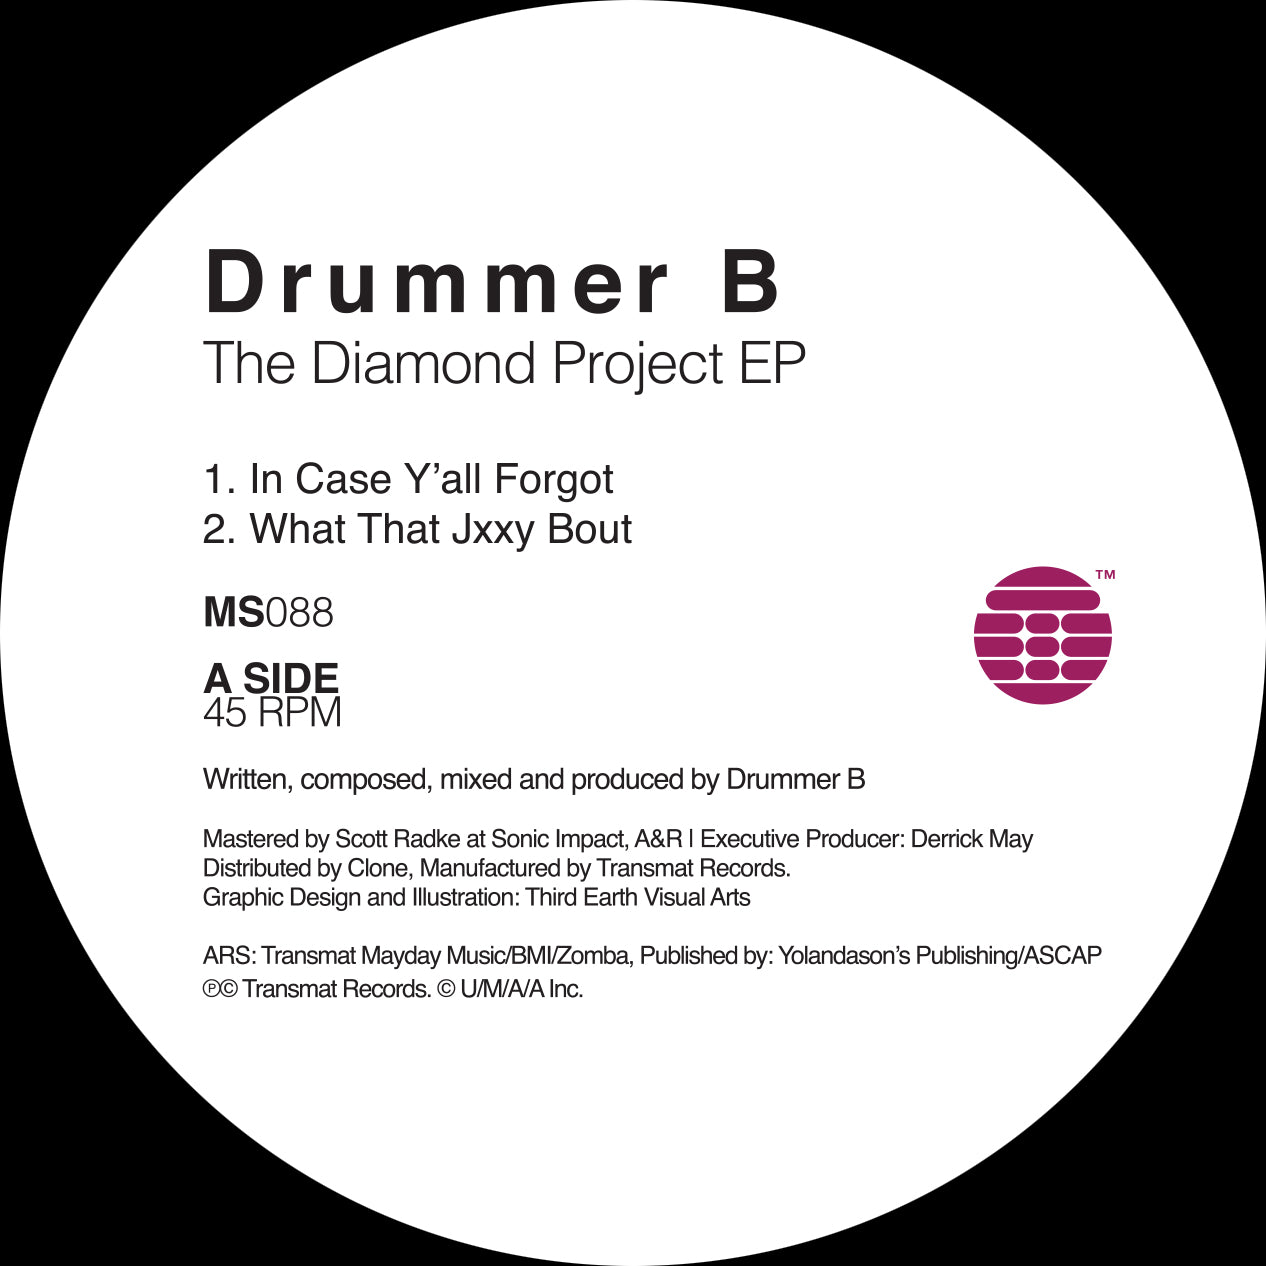 Drummer B 'The Diamond Project EP' 12" (REPRESS)